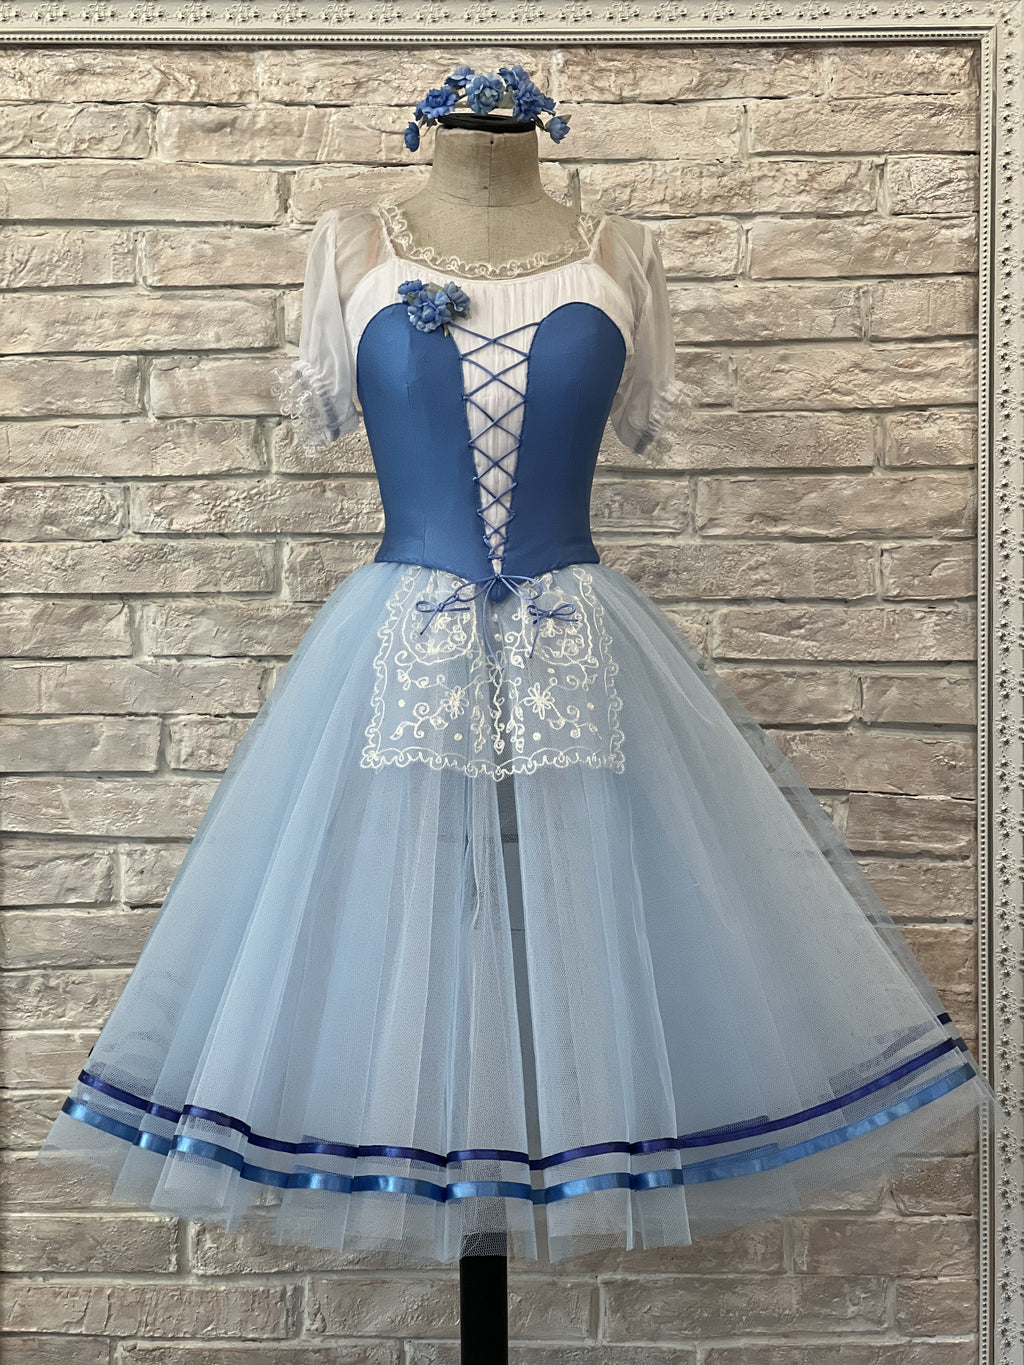 Russian Giselle - Dancewear by Patricia